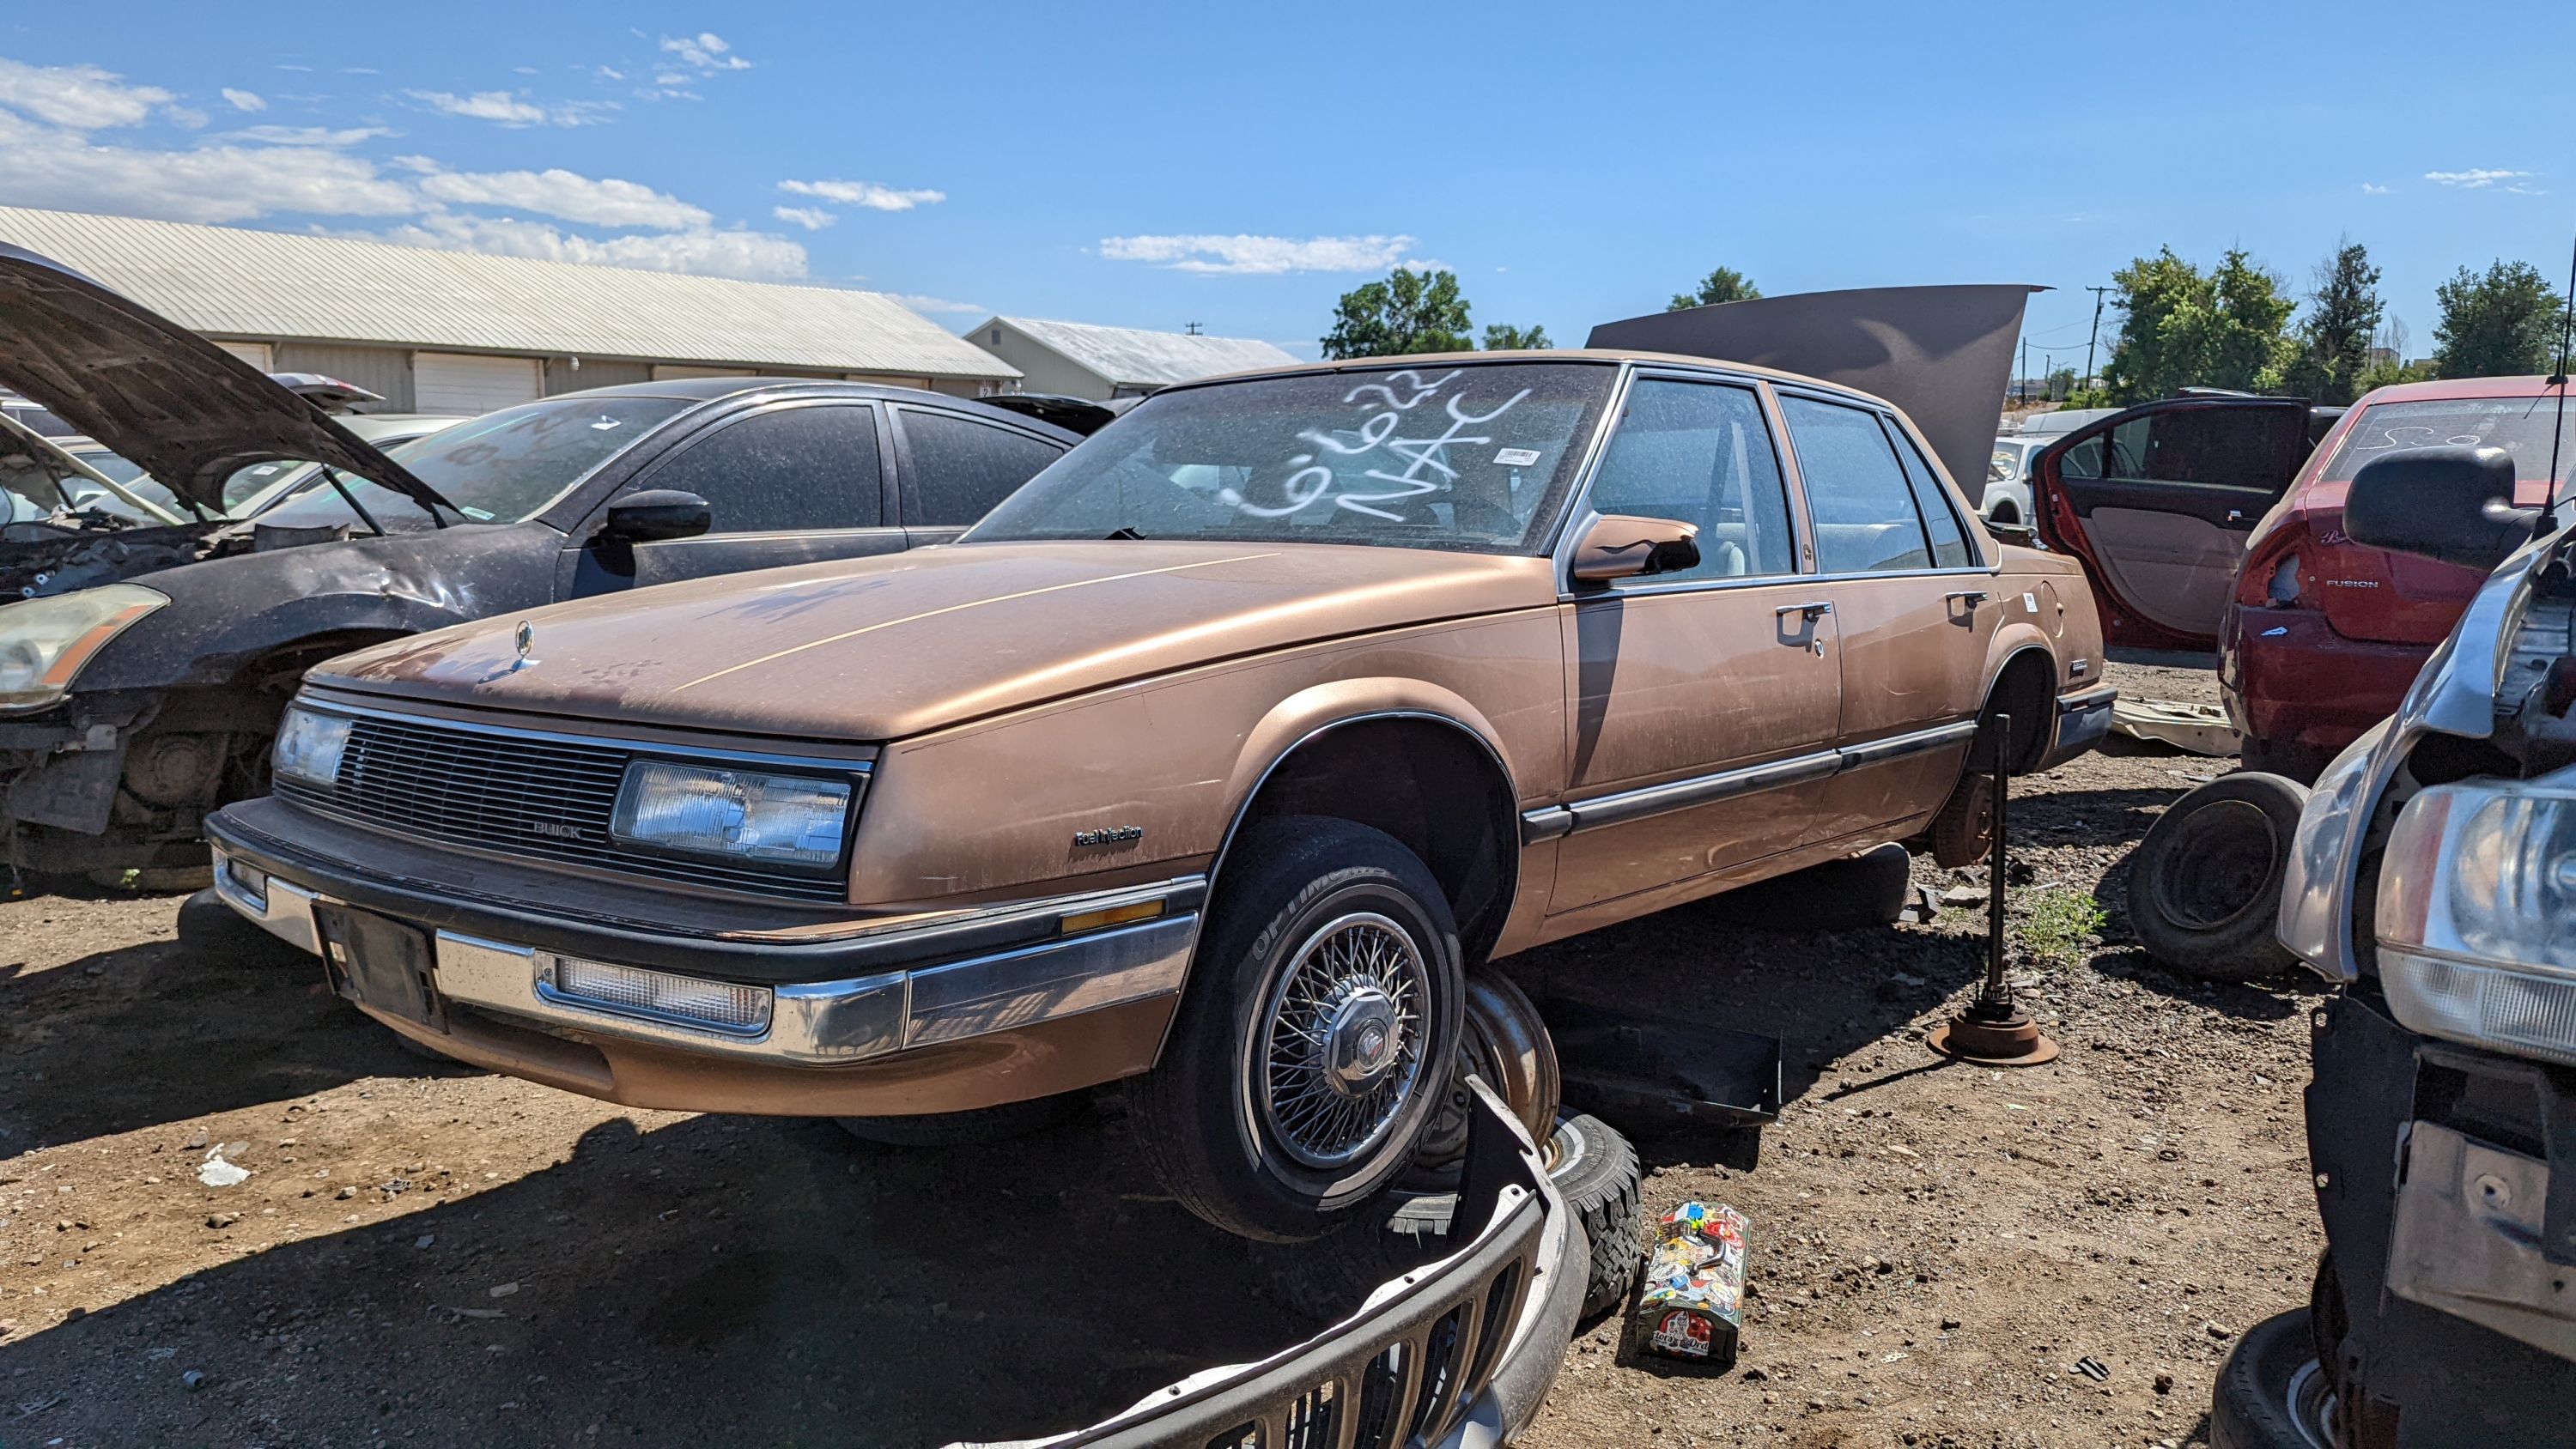 49 - 1988 Buick LeSabre in Colorado junkyard - Photo by Murilee Martin